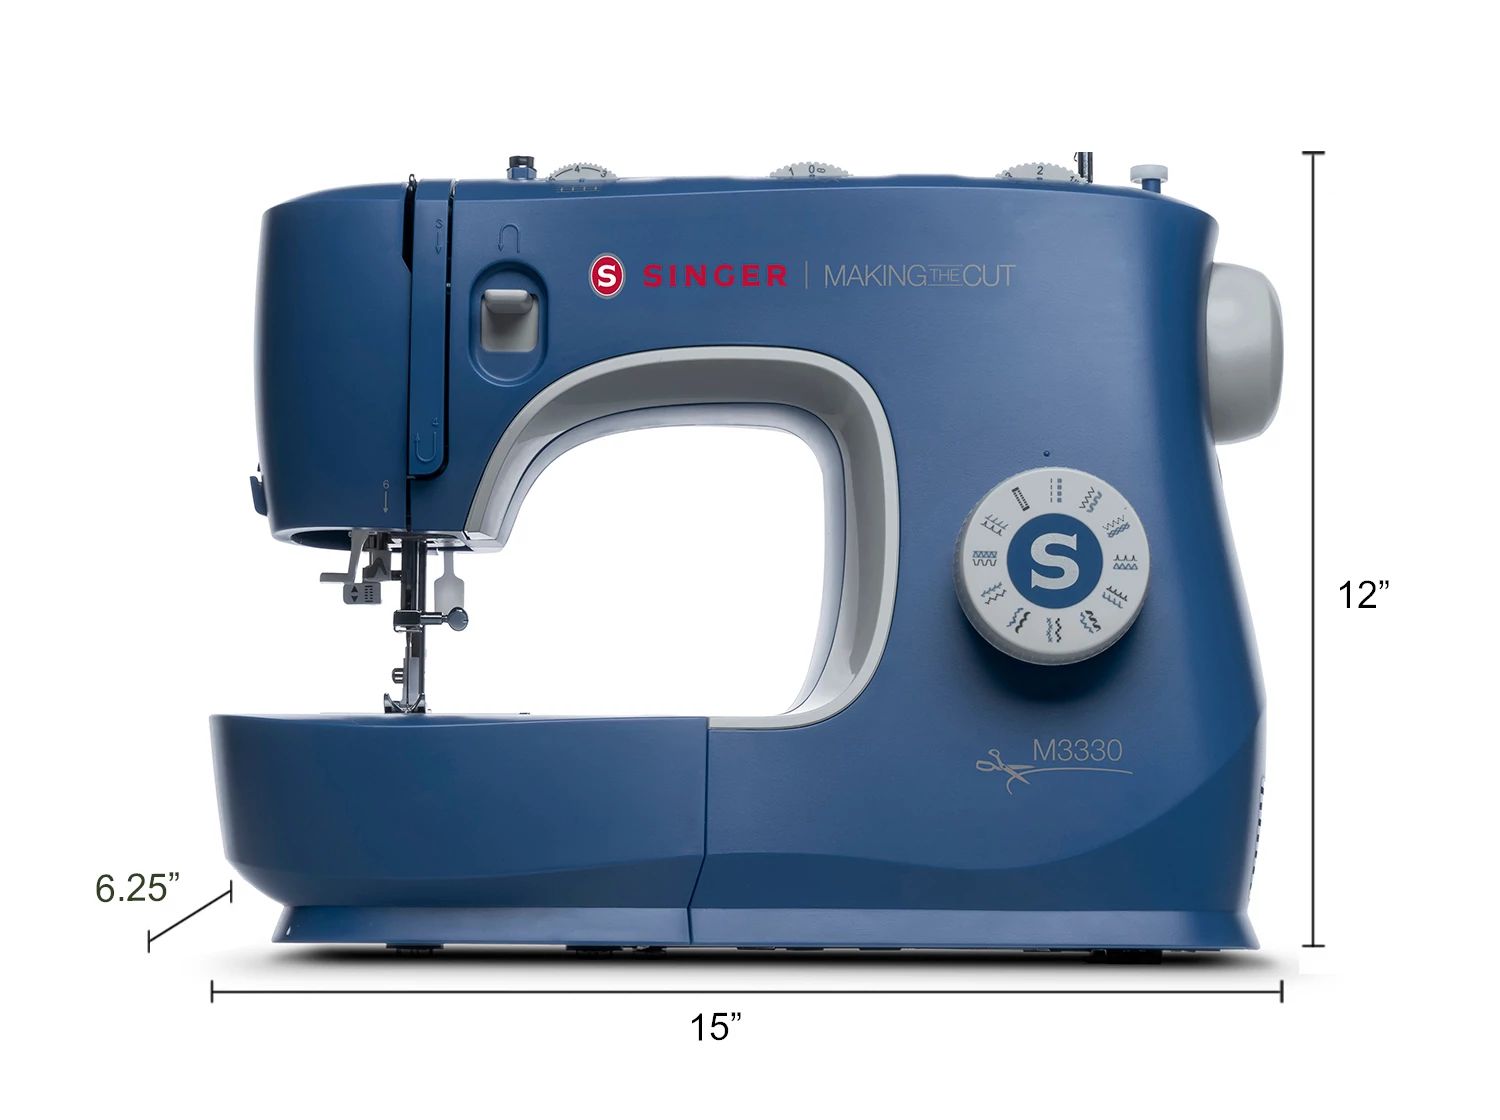 M3330 Sewing Machine Refurbished